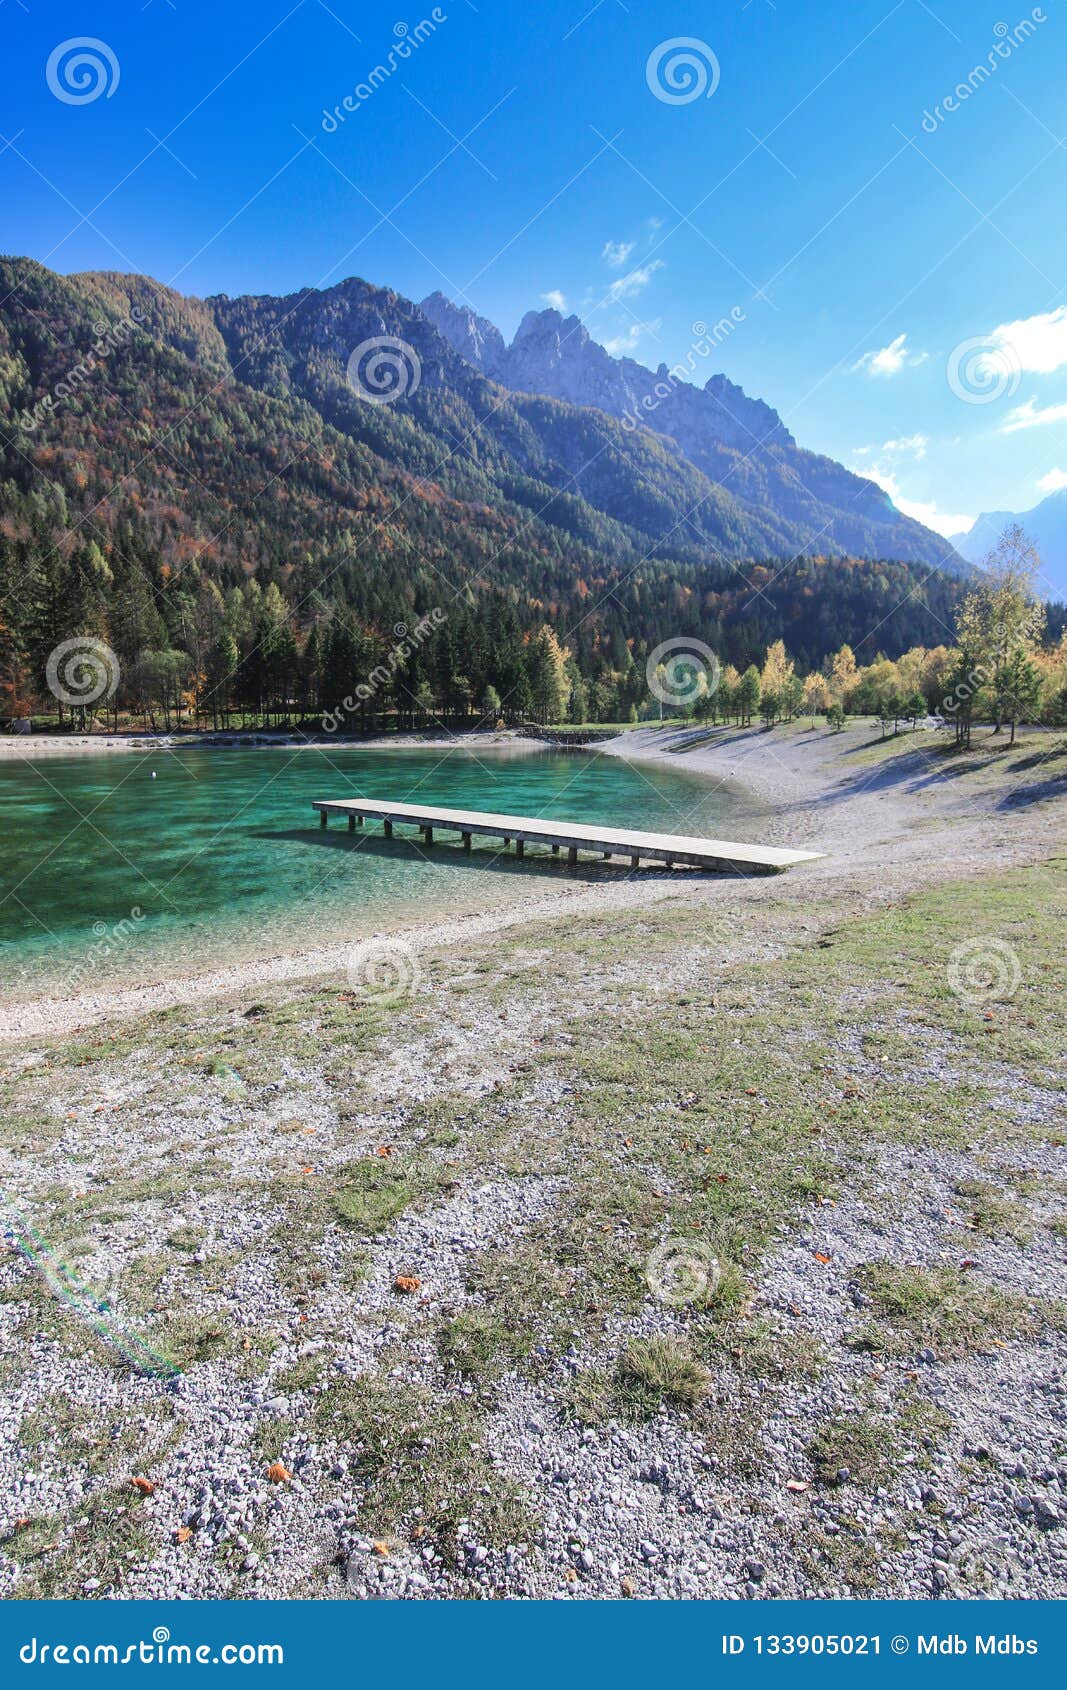 beautiful jasna lake at kranjska gora in slovenia